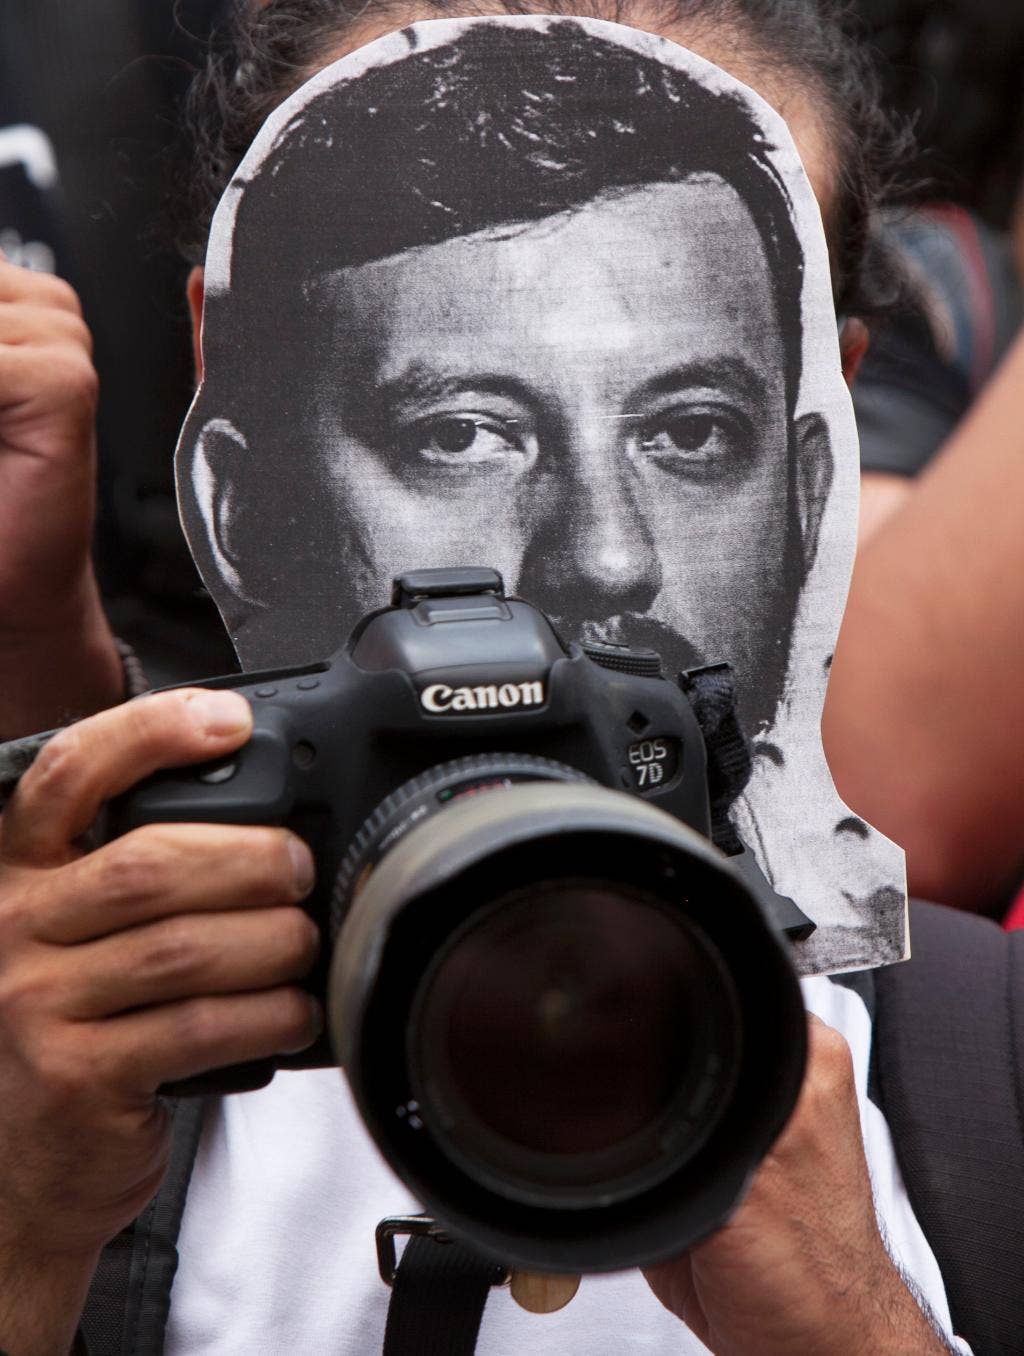 Free Speech Advocates Fear More Impunity In Latest Mexico Journalist Killing Fox News